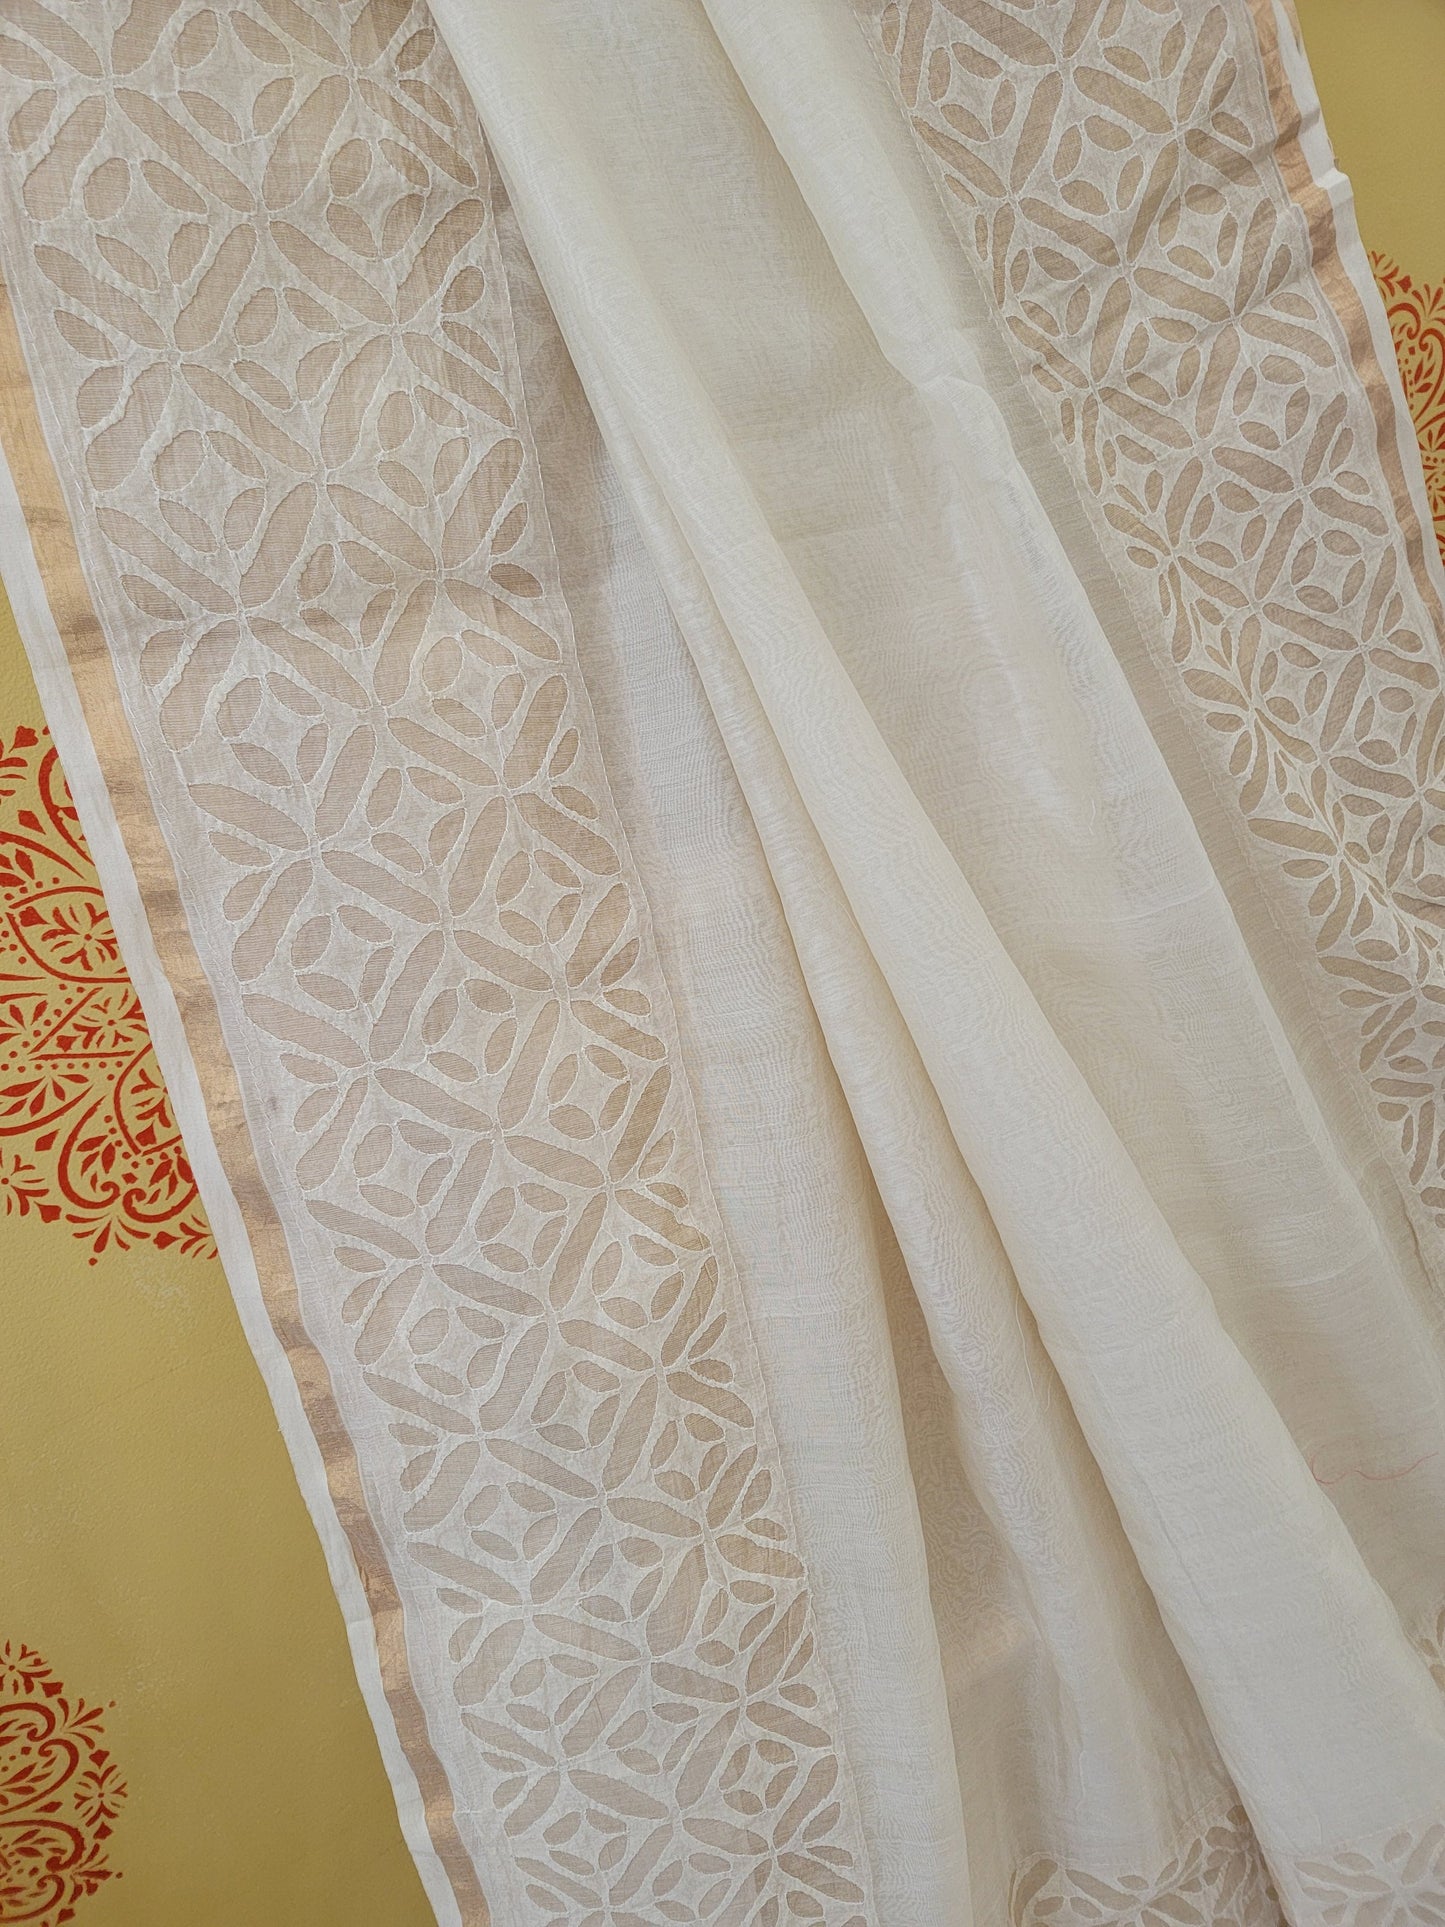 Handcrafted Applique Work Saree on Handwoven Maheshwari Silk